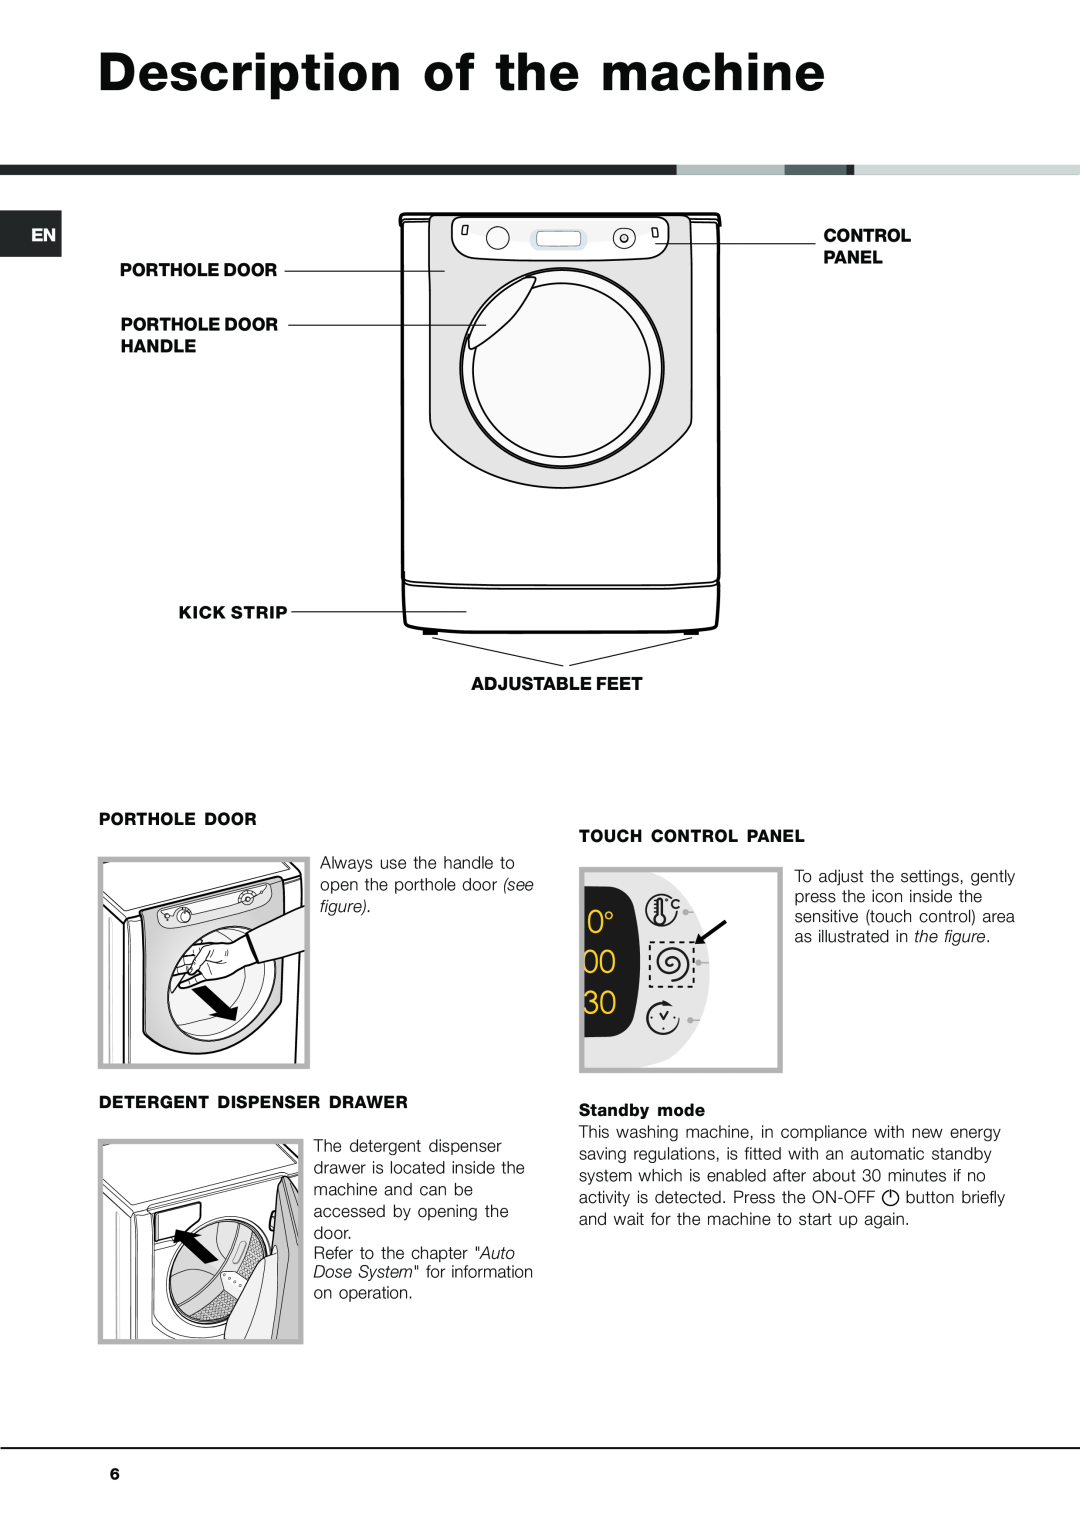 Xerox AQLF9D 69 U manual Description of the machine 